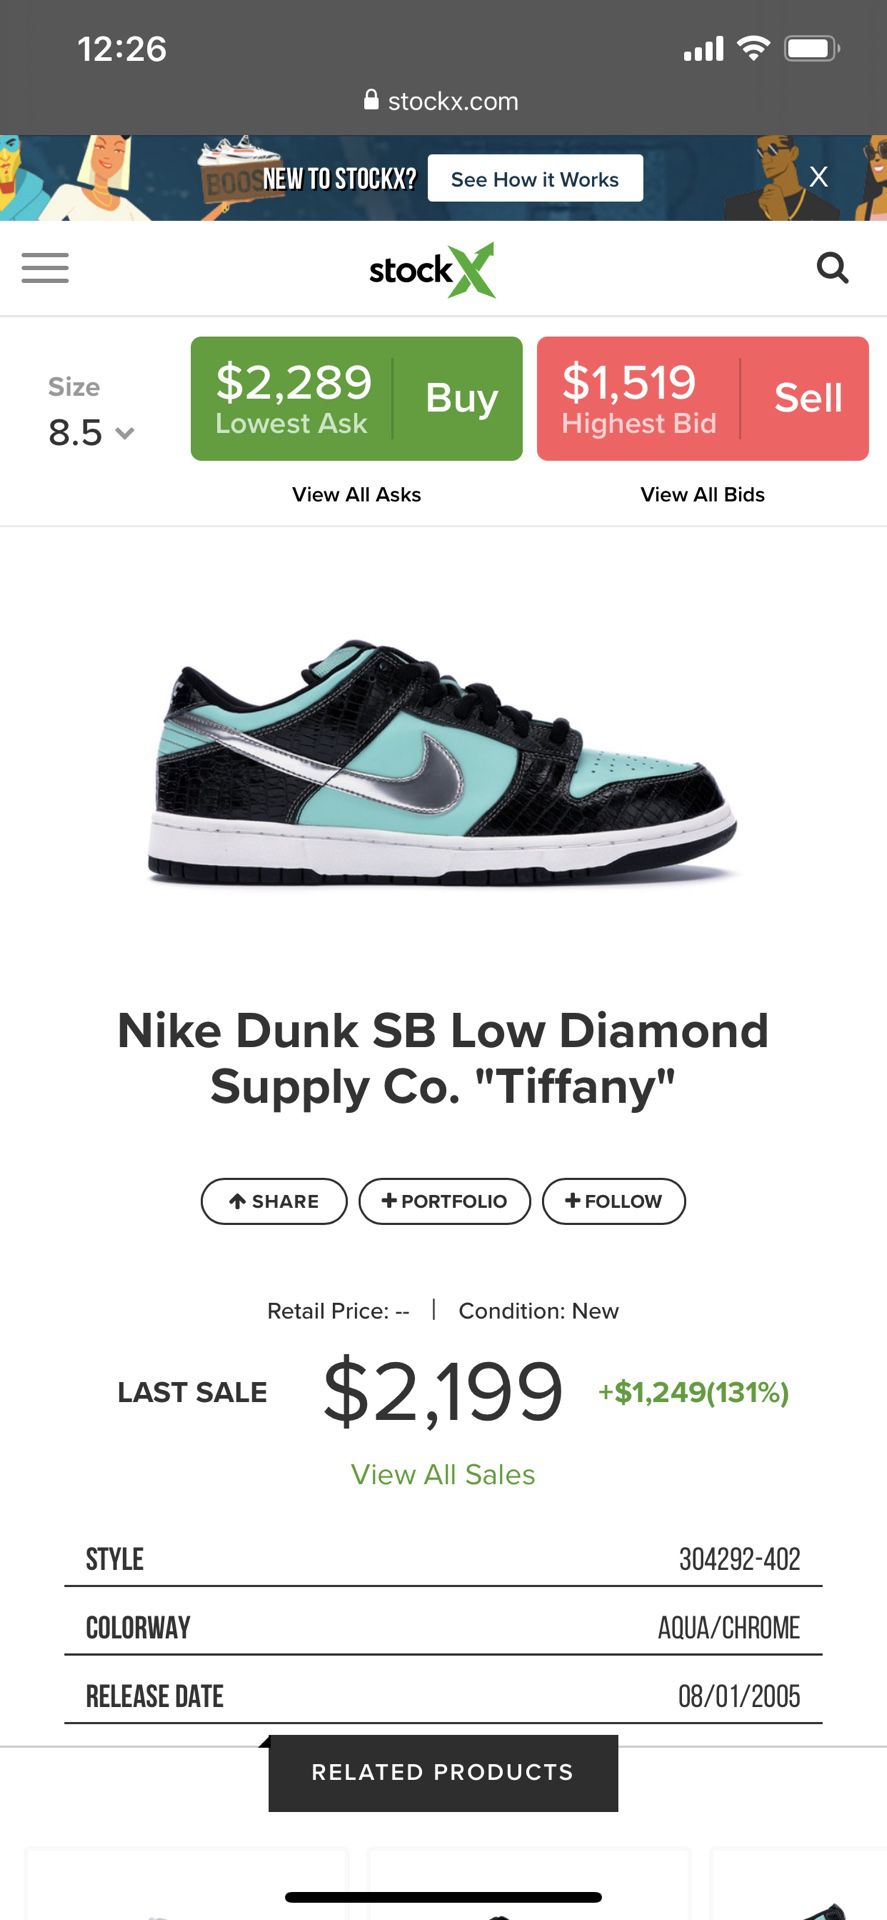 Nike Dunk SB Low Diamond Supply Co. "Tiffany" $1000.00